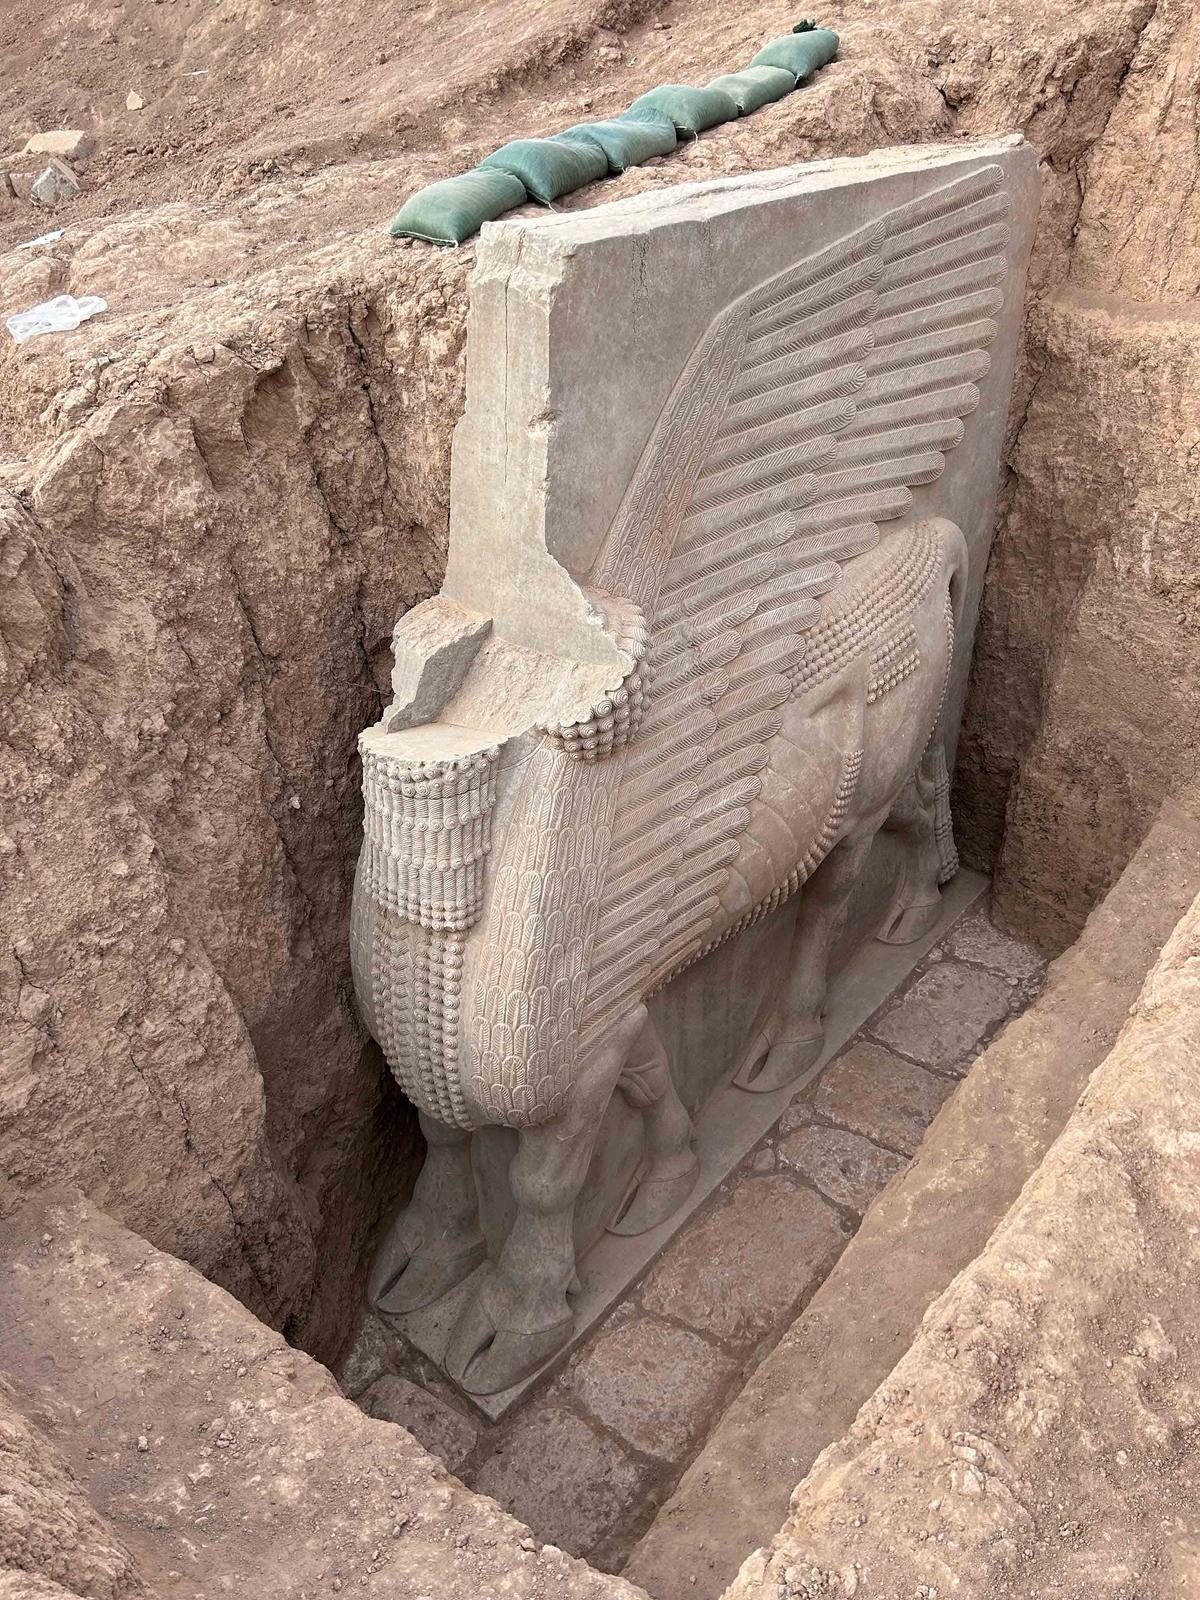  A headless lamassu statue at a dig site in Khorsabad, Iraq. (Courtesy of Mission archéologique française à Khorsabad, P. Butterlin)